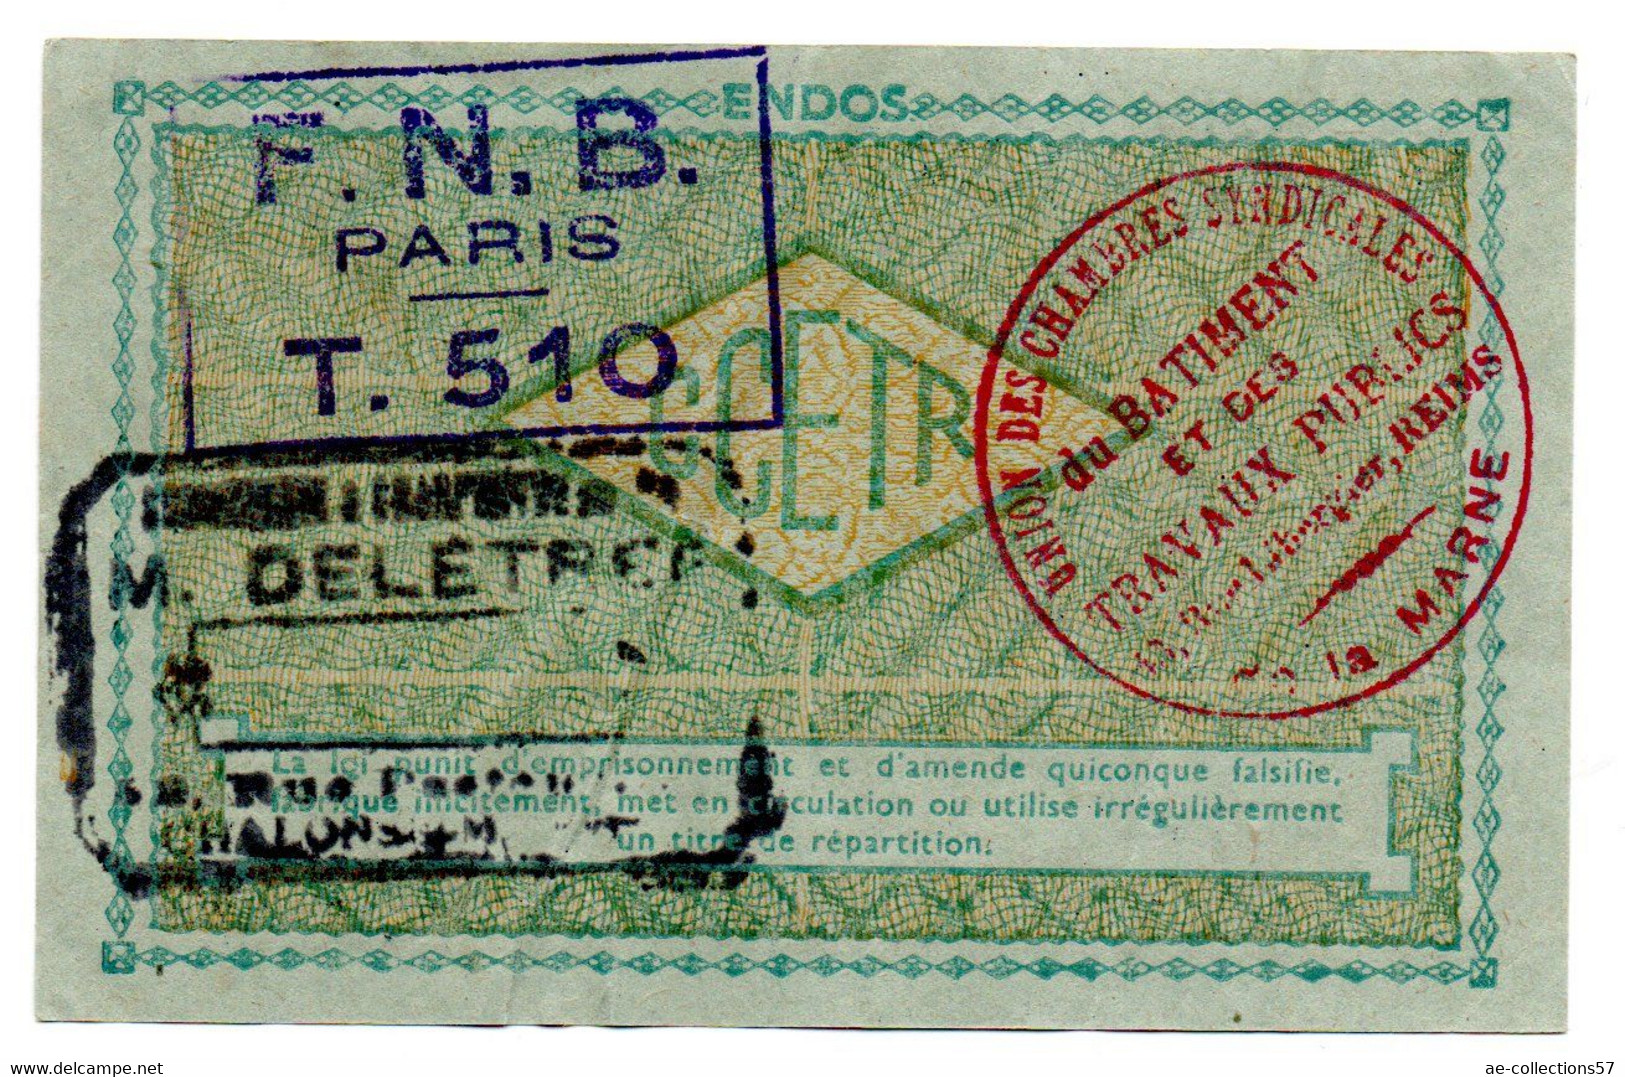 France -  50 KG Acier Ordinaire 31/12/1948 -  O C R P I -  TTB - Bonds & Basic Needs